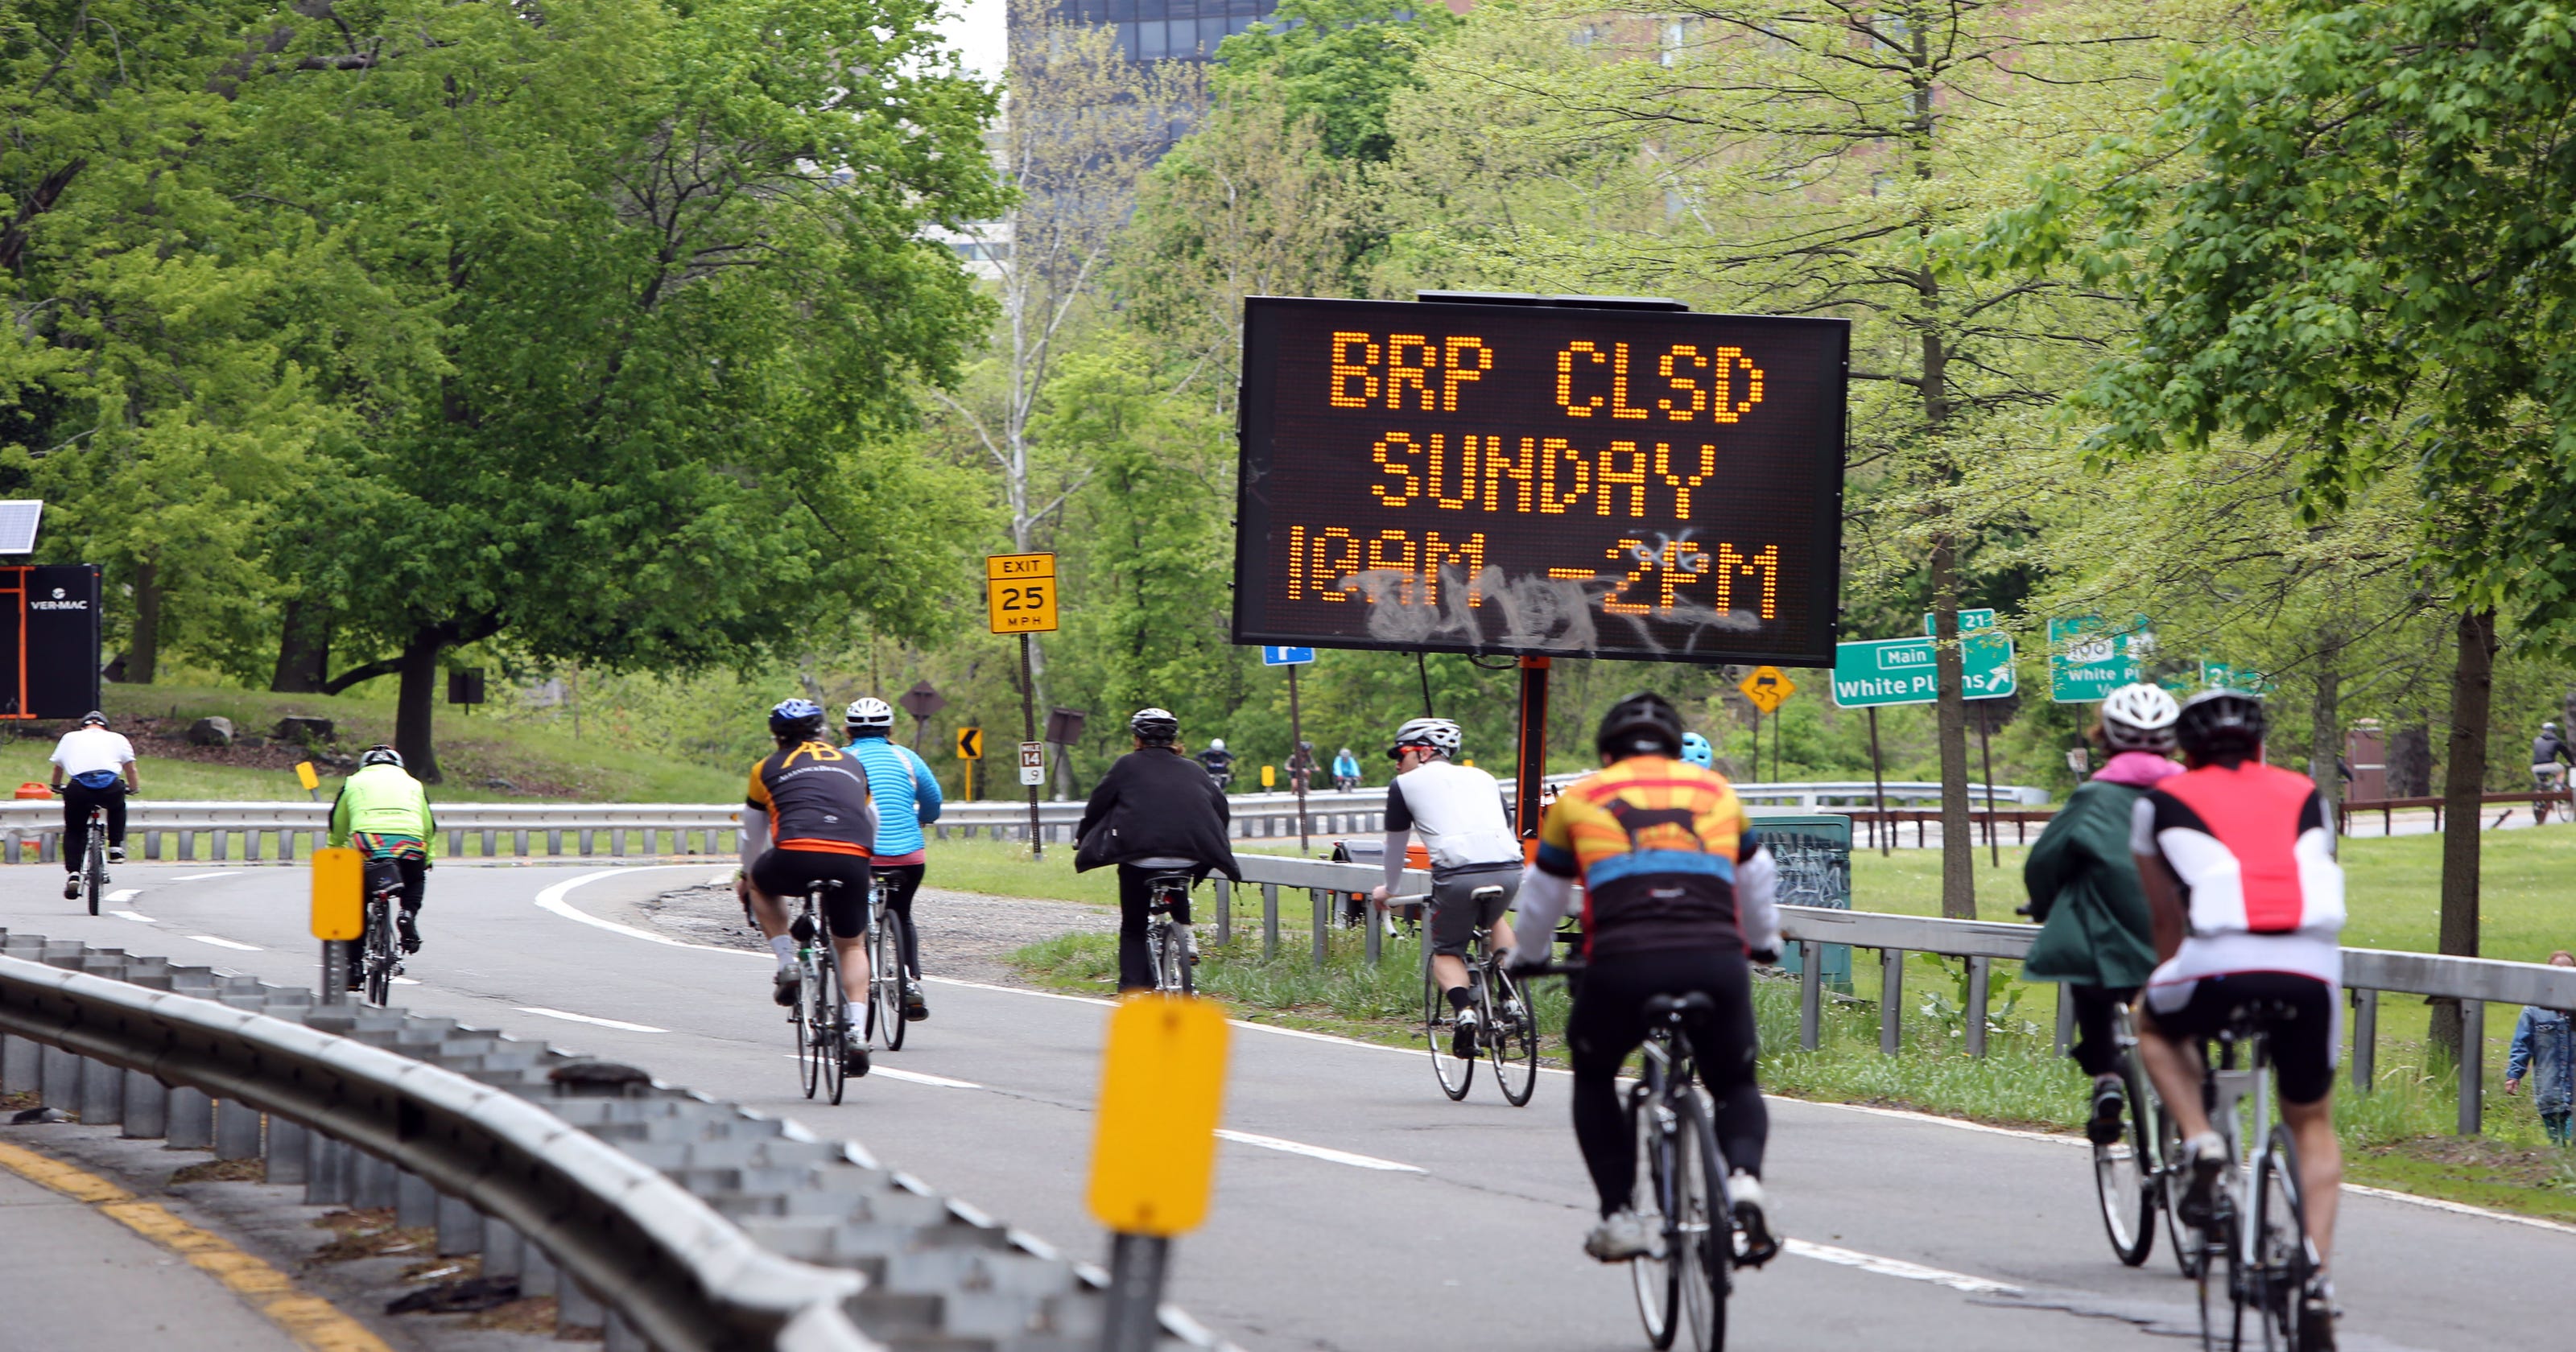 2019 Bicycle Sundays return to Bronx River Parkway May 5